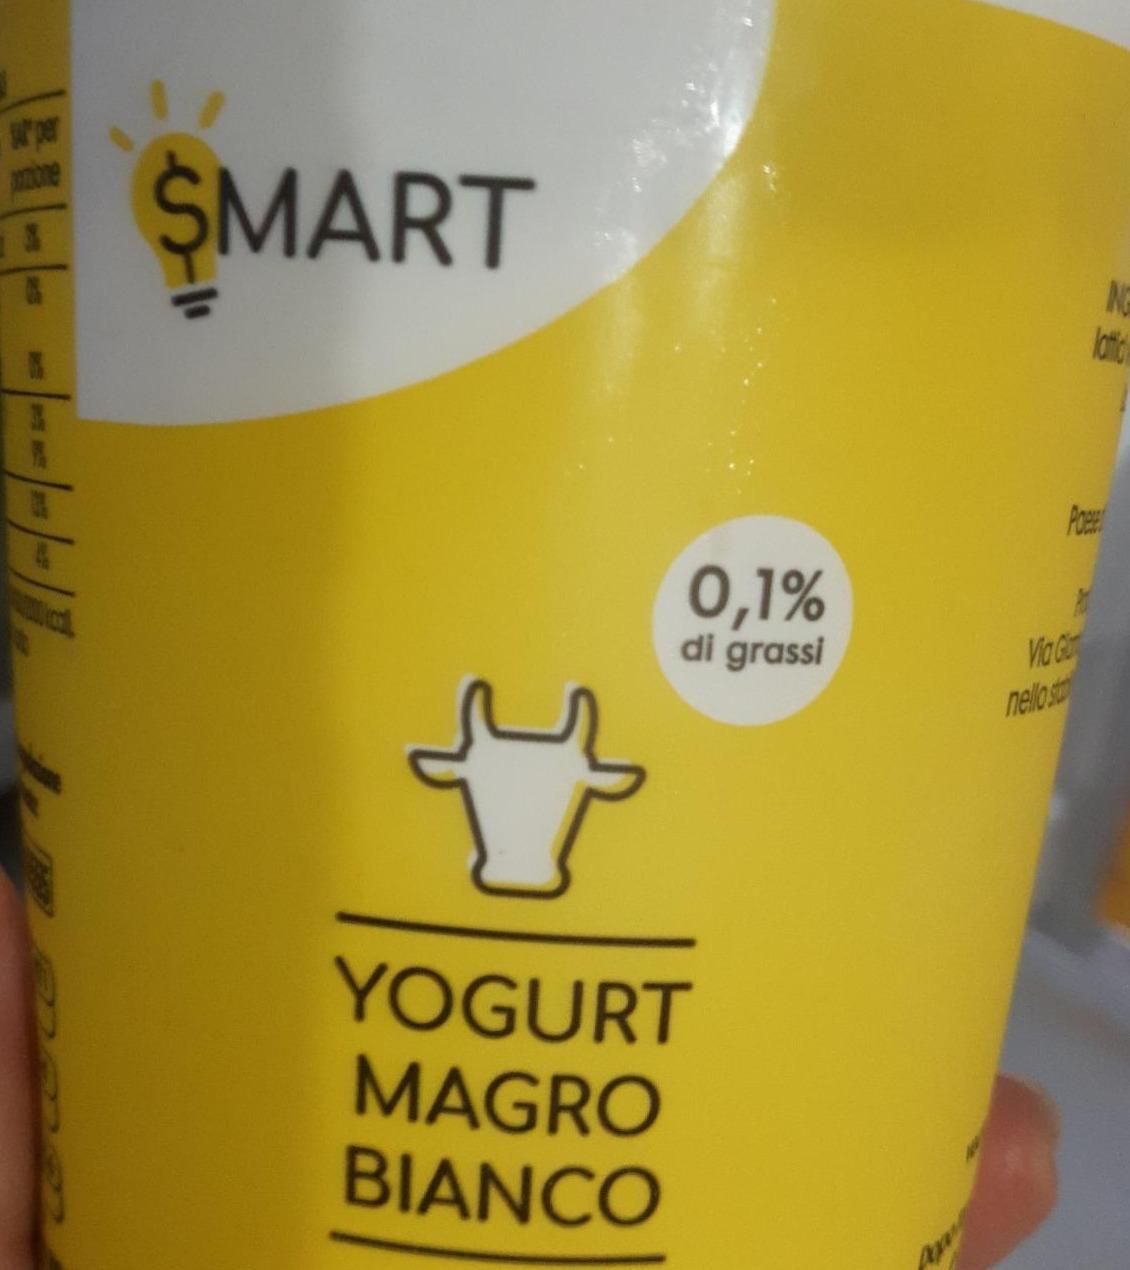 Fotografie - Yogurt magro bianco Smart